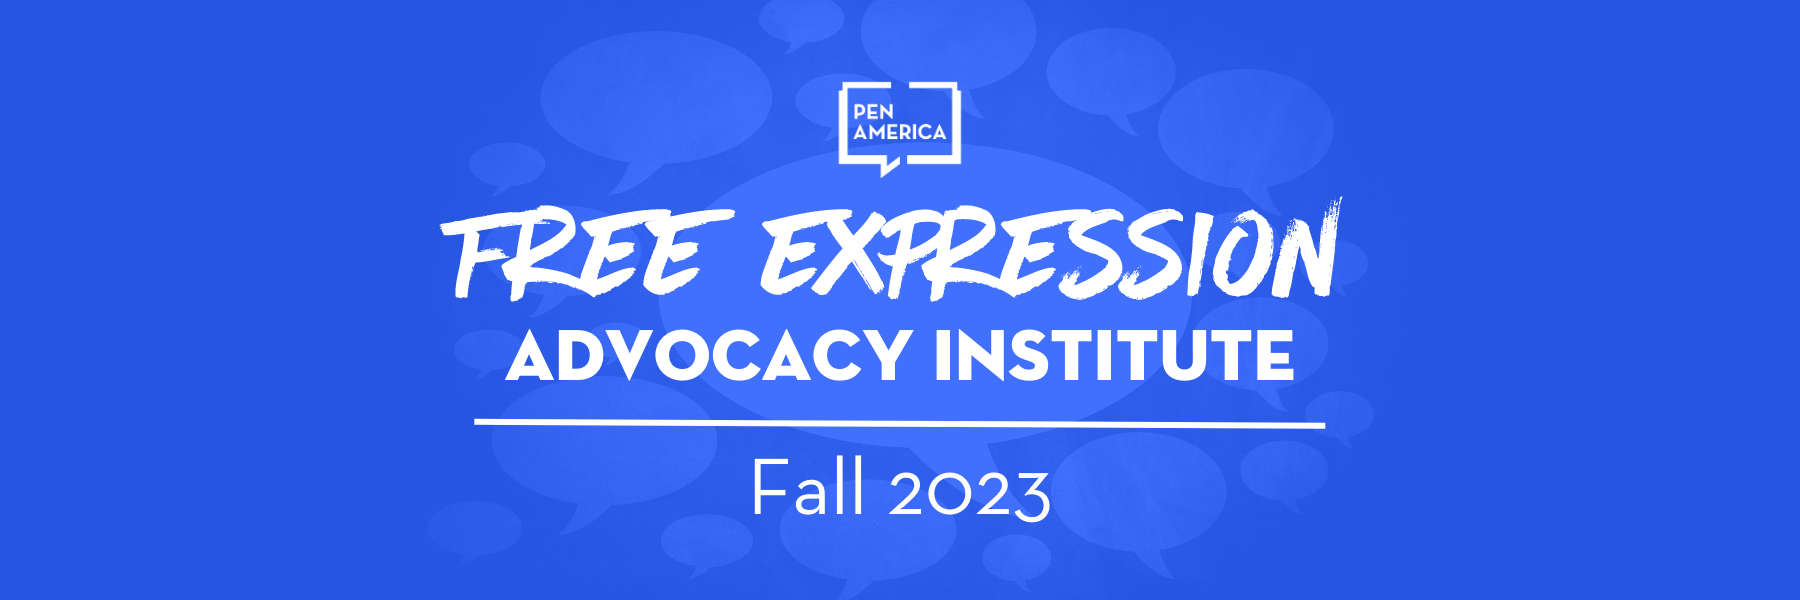 Fall 2023 Free Expression Advocacy Institute Lockup